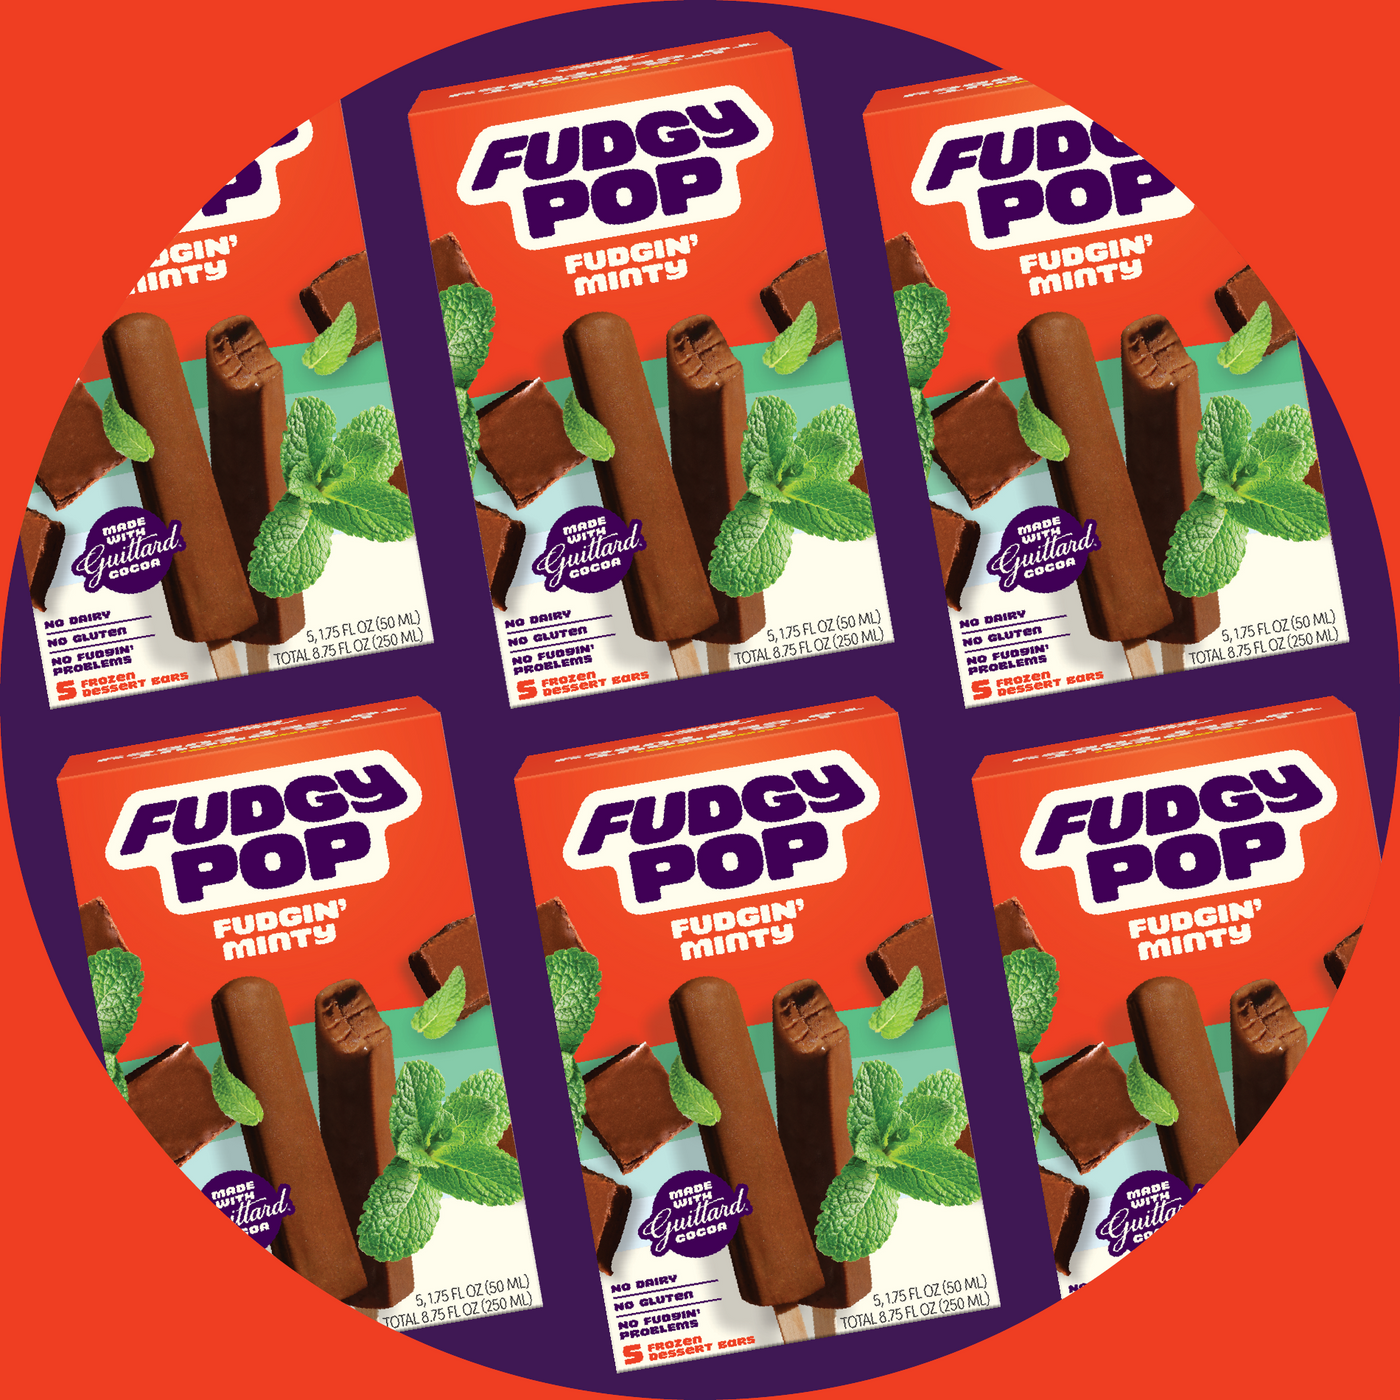 Fudgy Pop Fudgin' Minty 6 pack